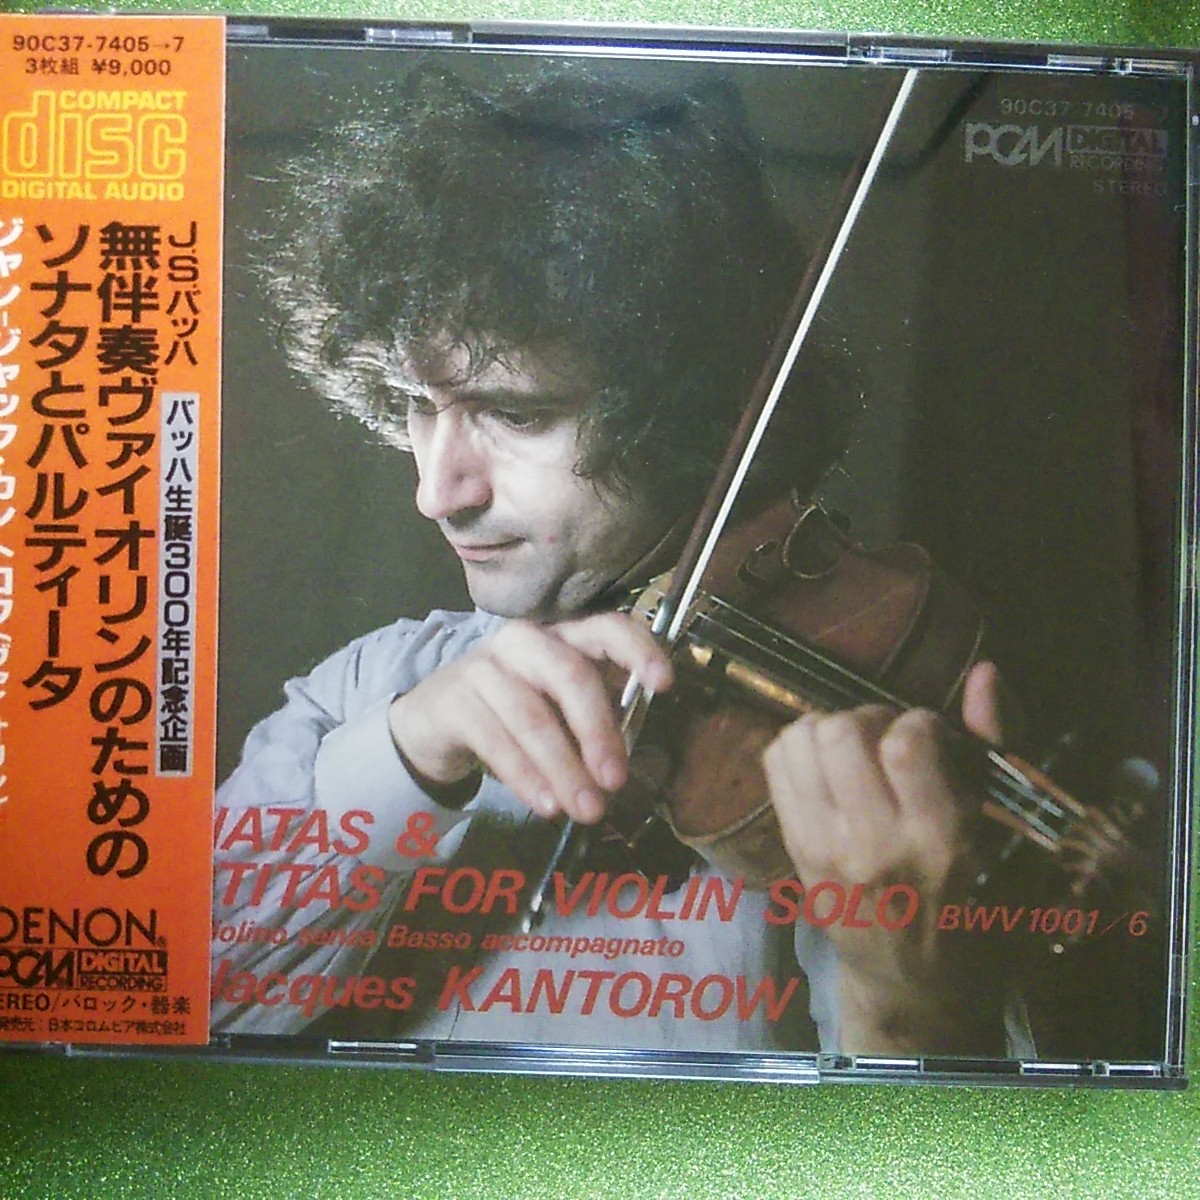 b（国内初期盤、3CD）カントロフ、バッハ「無伴奏ヴァイオリンのためのソナタとパルティータ」Kantorow Bach Solo Violin Sonatas